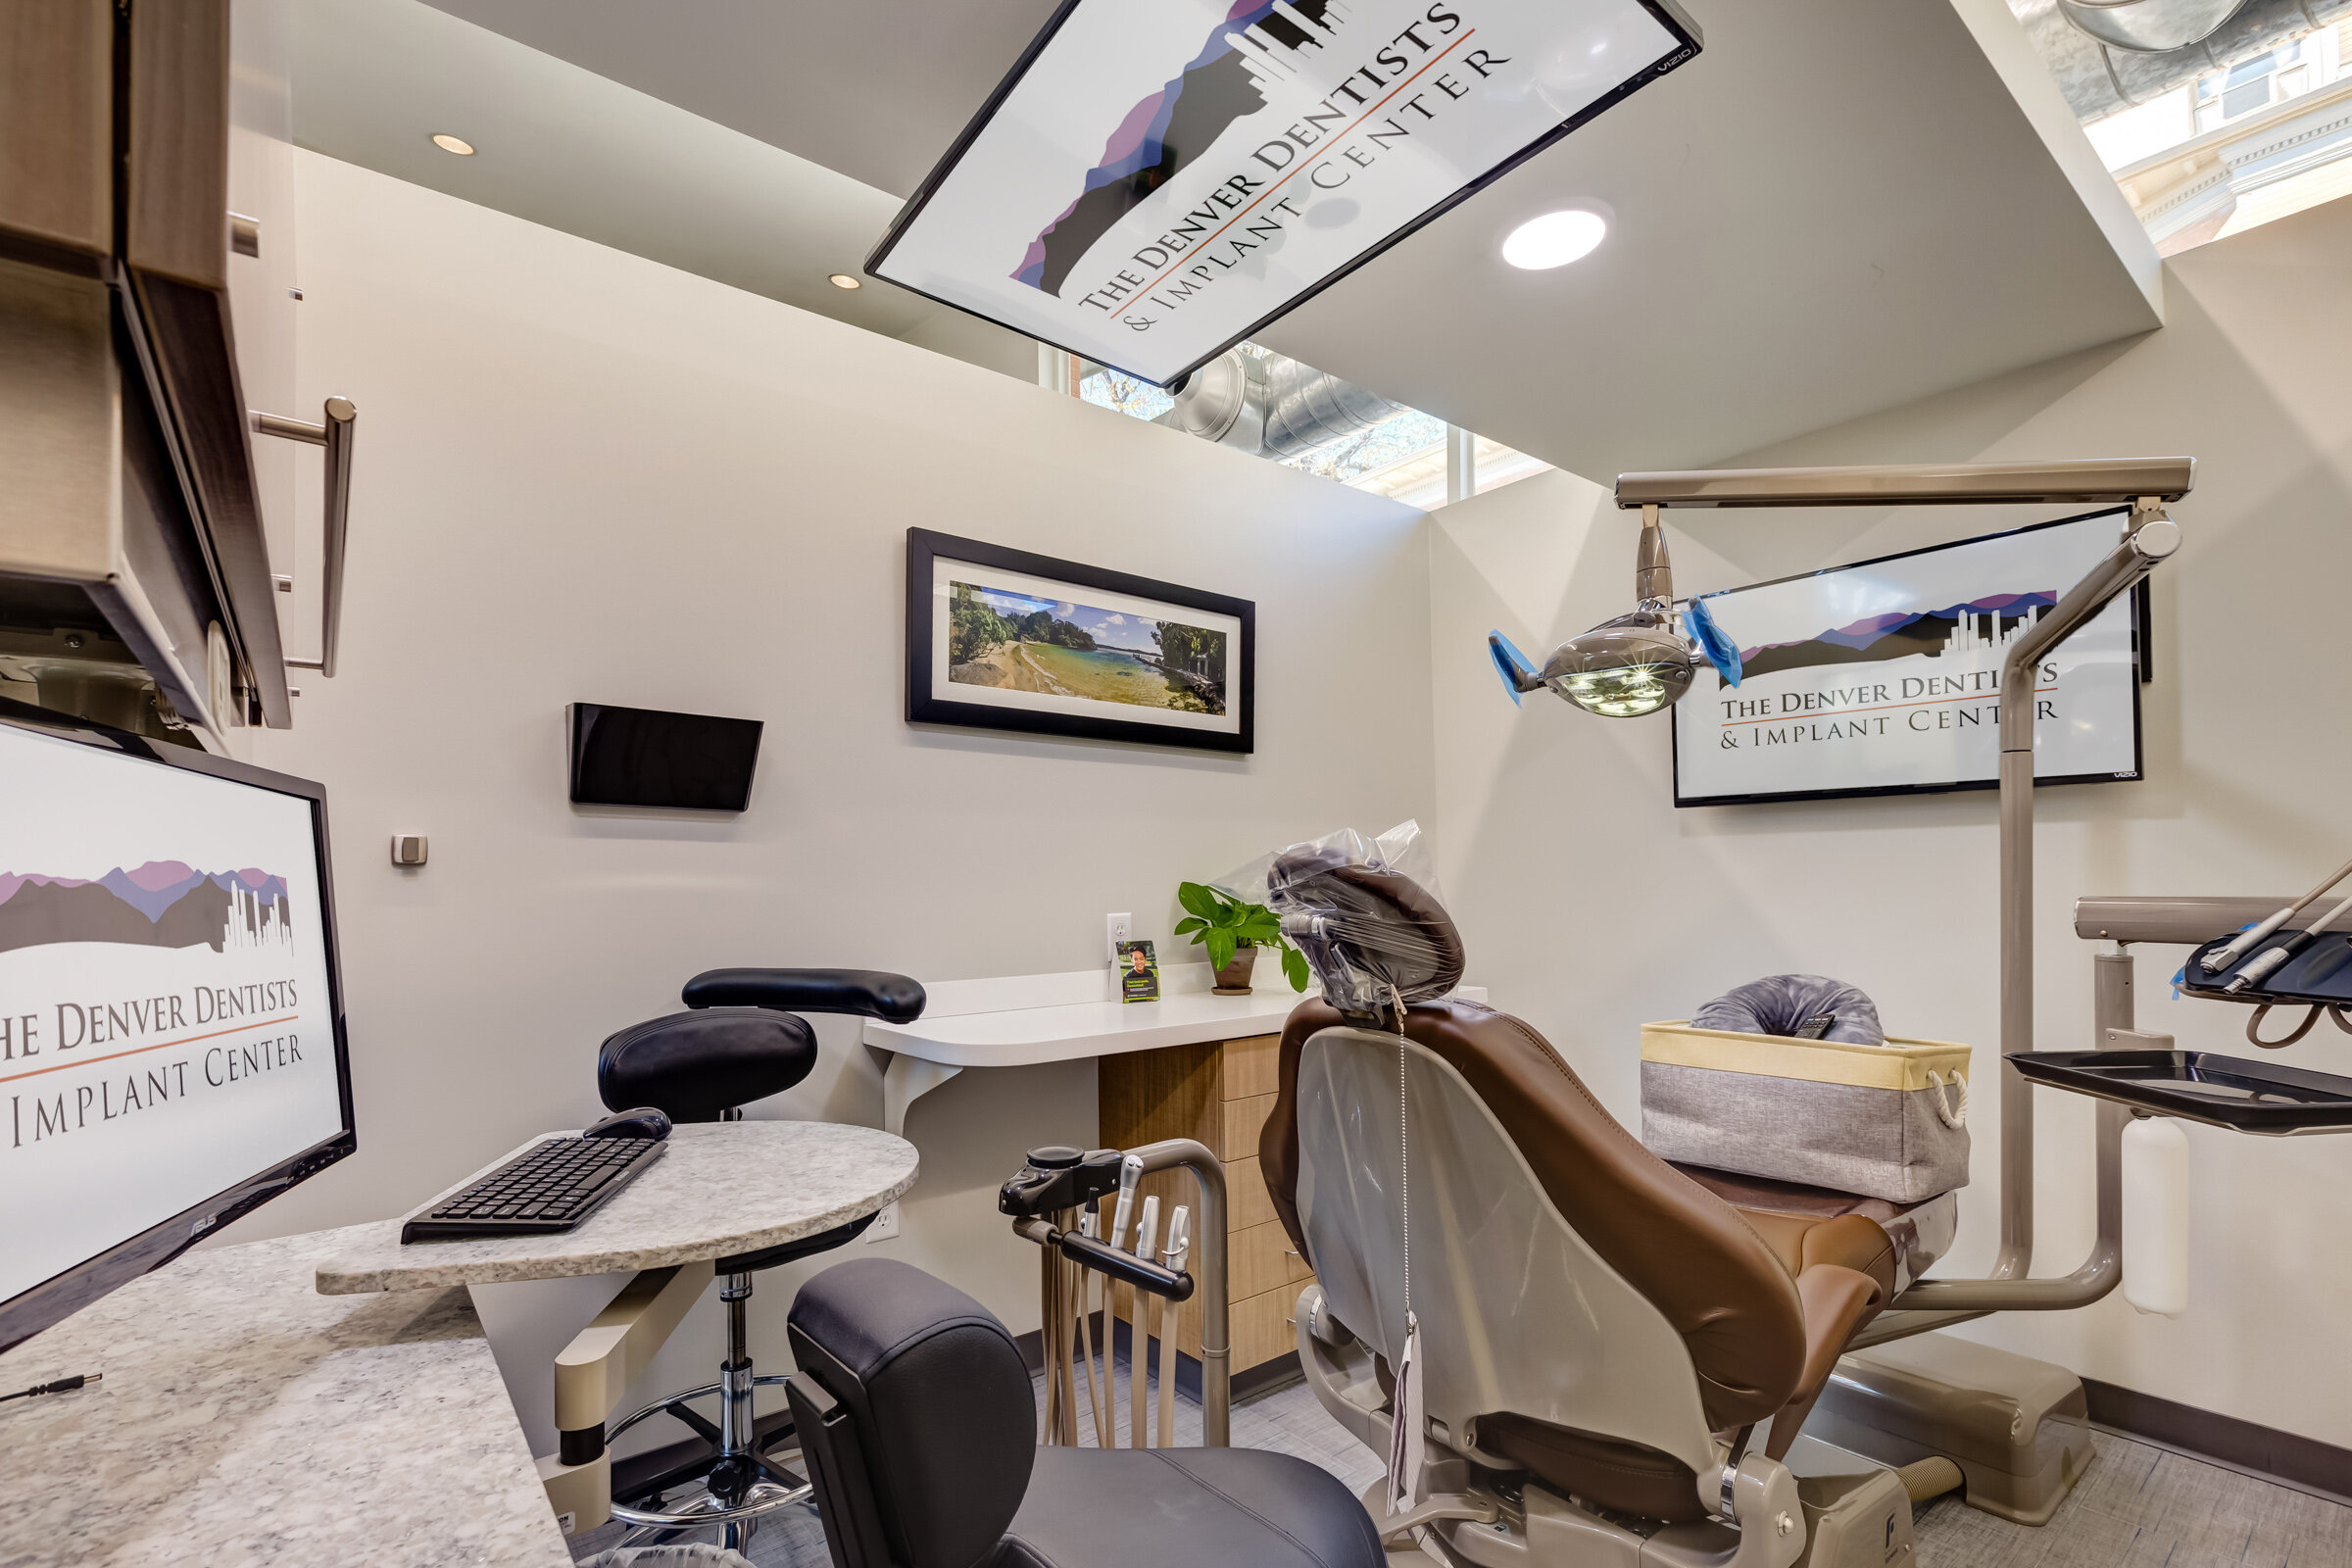 The Denver Dentists & Implant Center